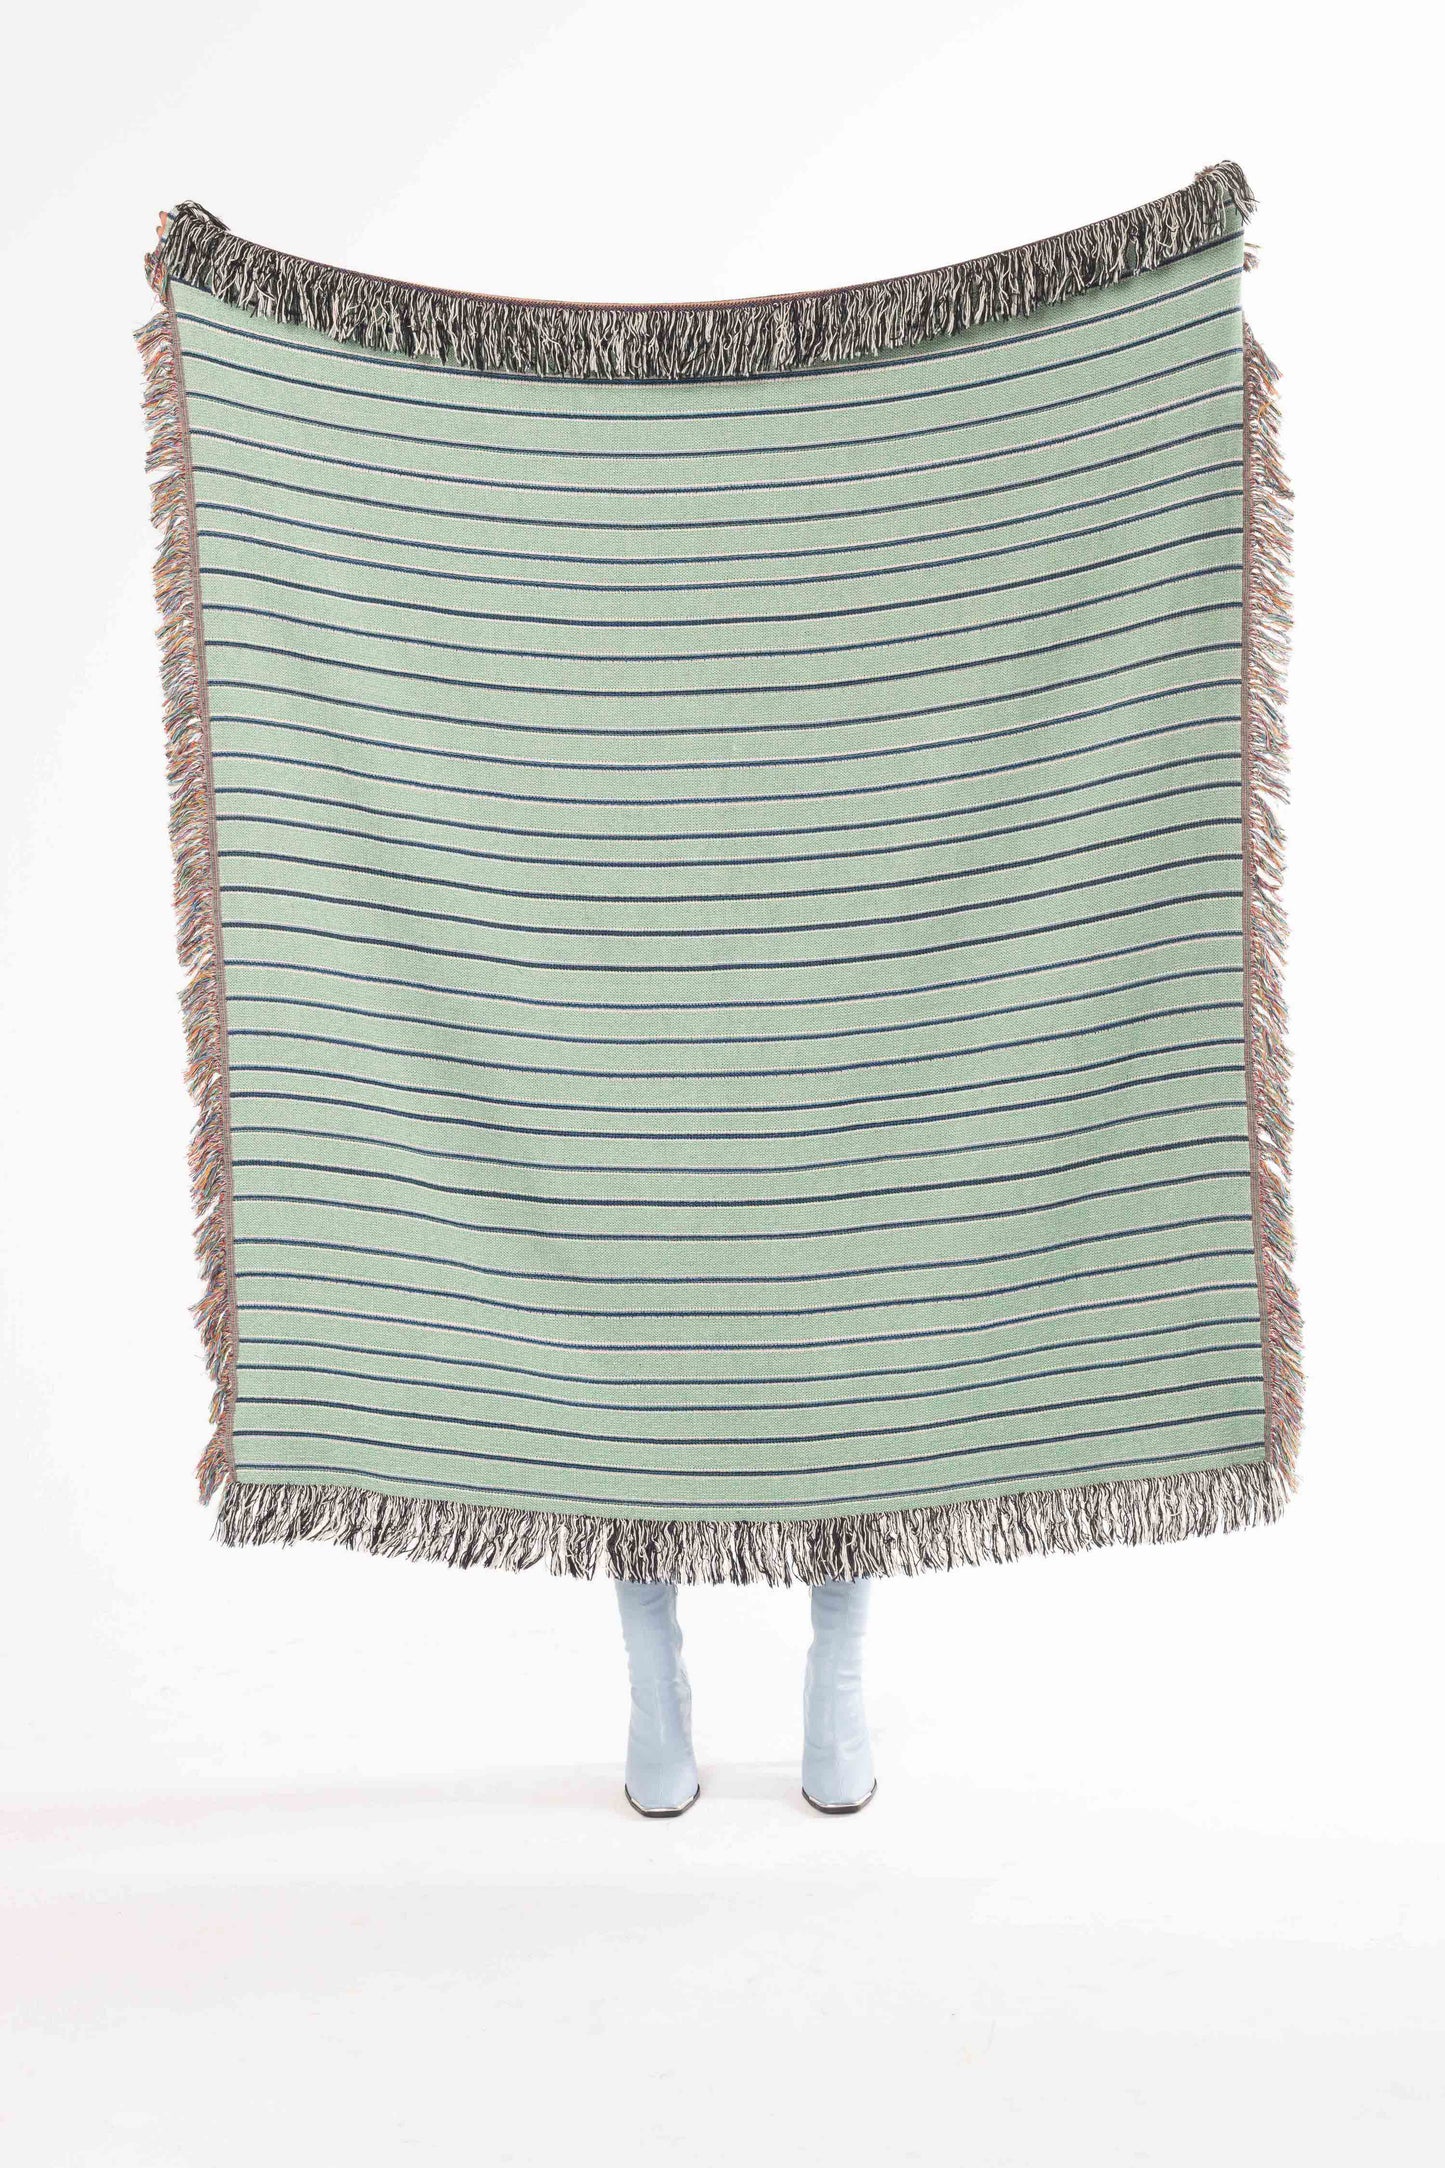 Stripey Mint Woven Throw Blanket